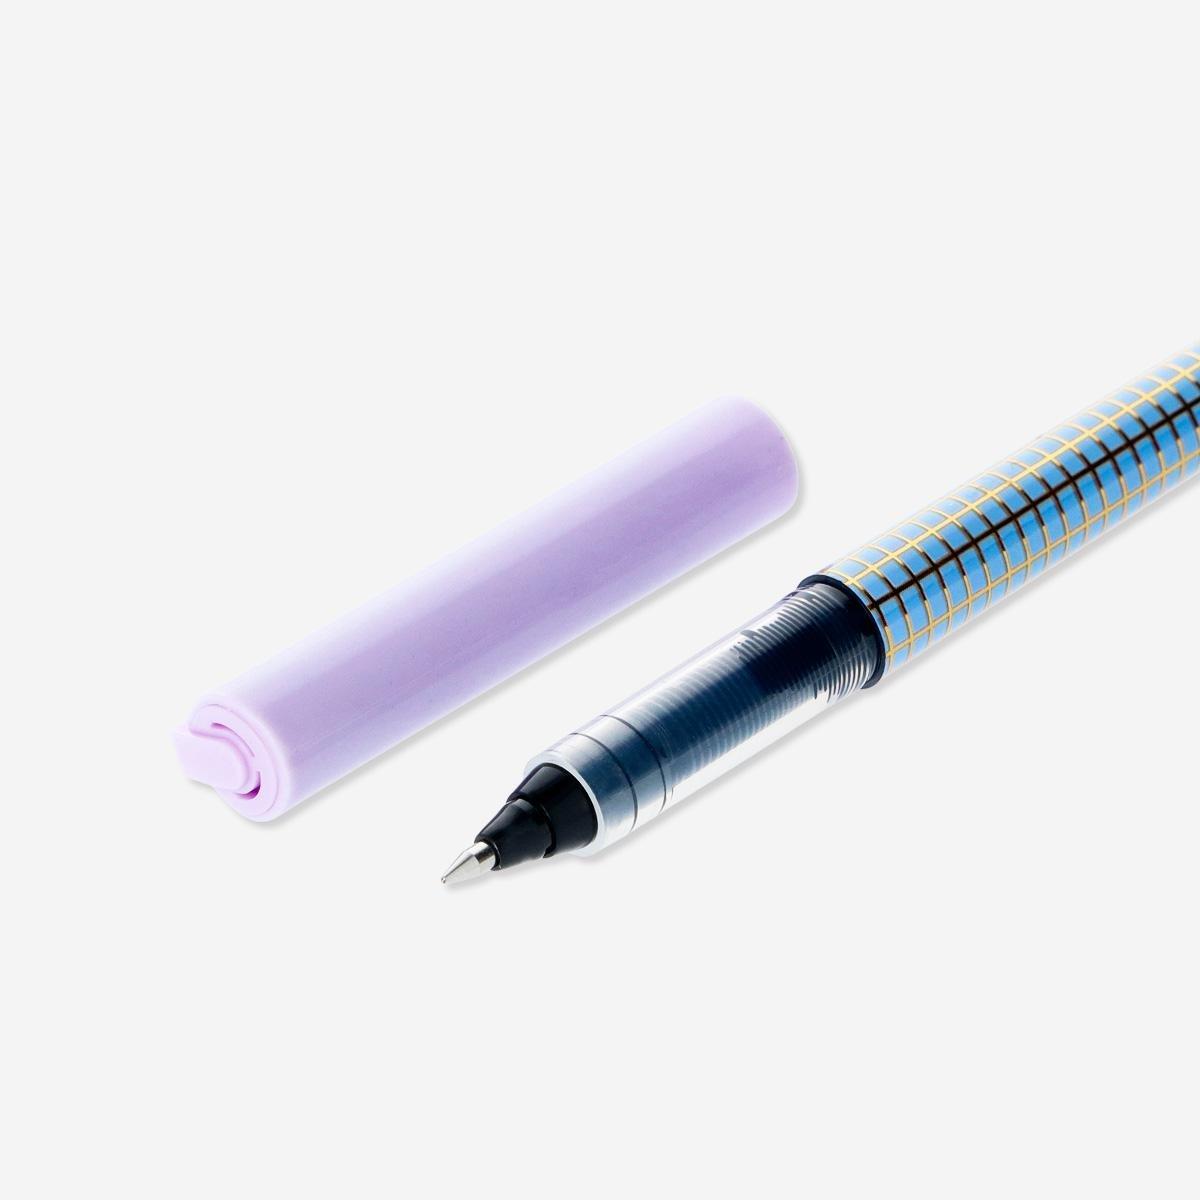 Blue rollerball pen